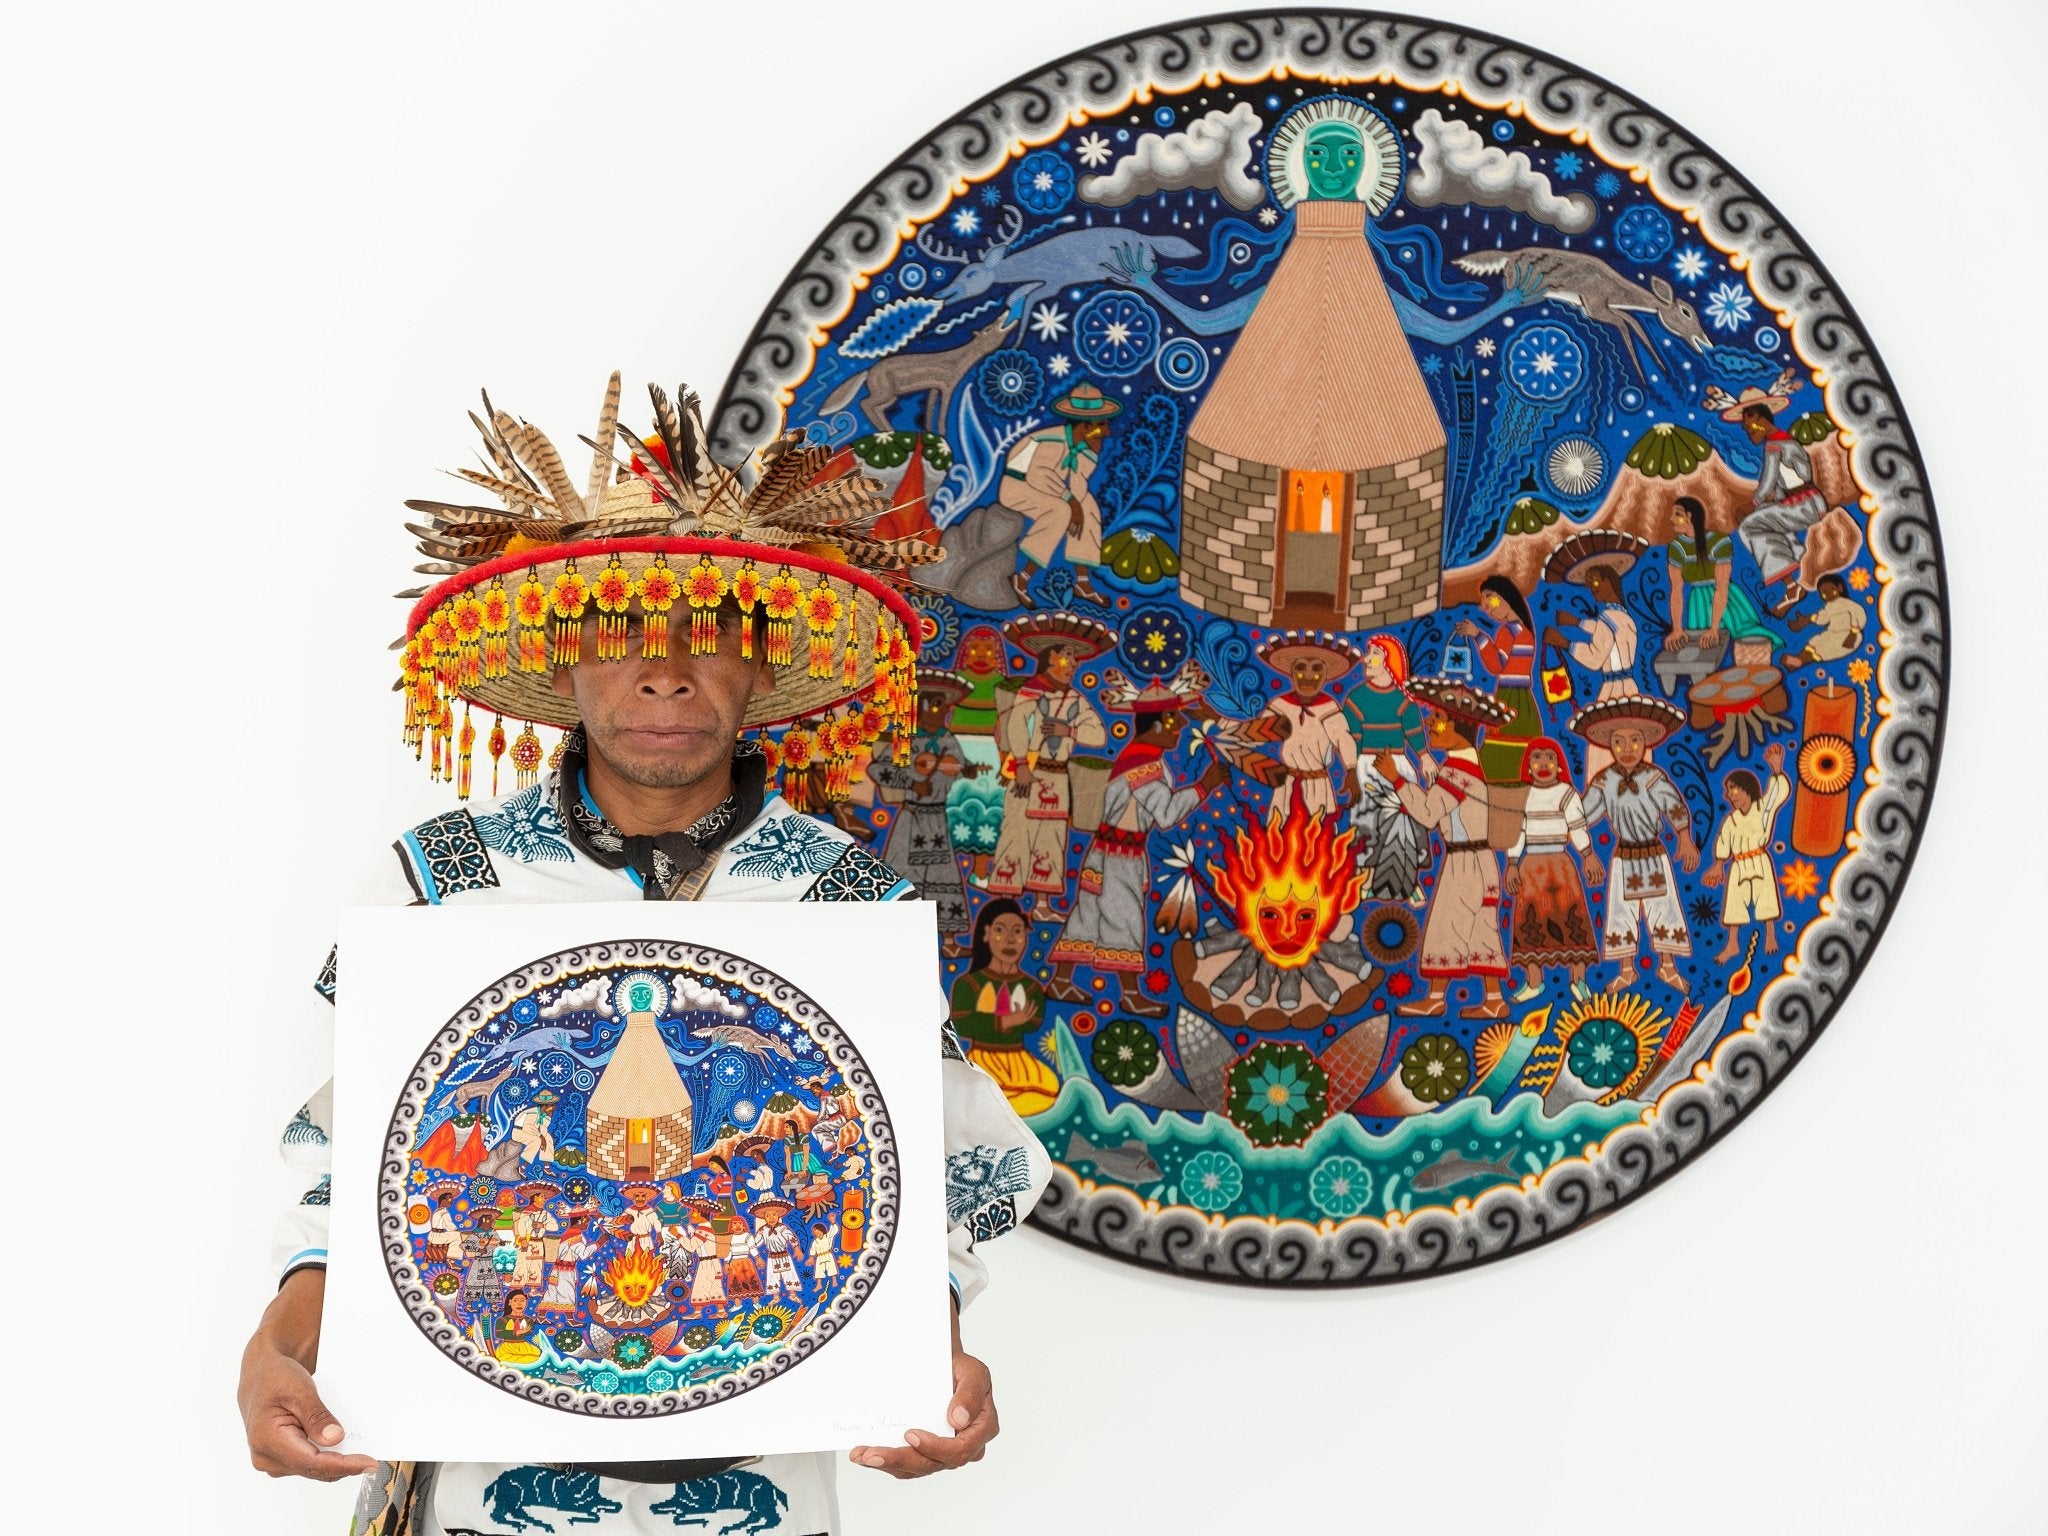 Hikuri Neixa - 儀式センターでのペヨーテダンス - 45 x 45 cm。 - 18×18インチ。 - ウイチョル族の芸術 - マラカメ